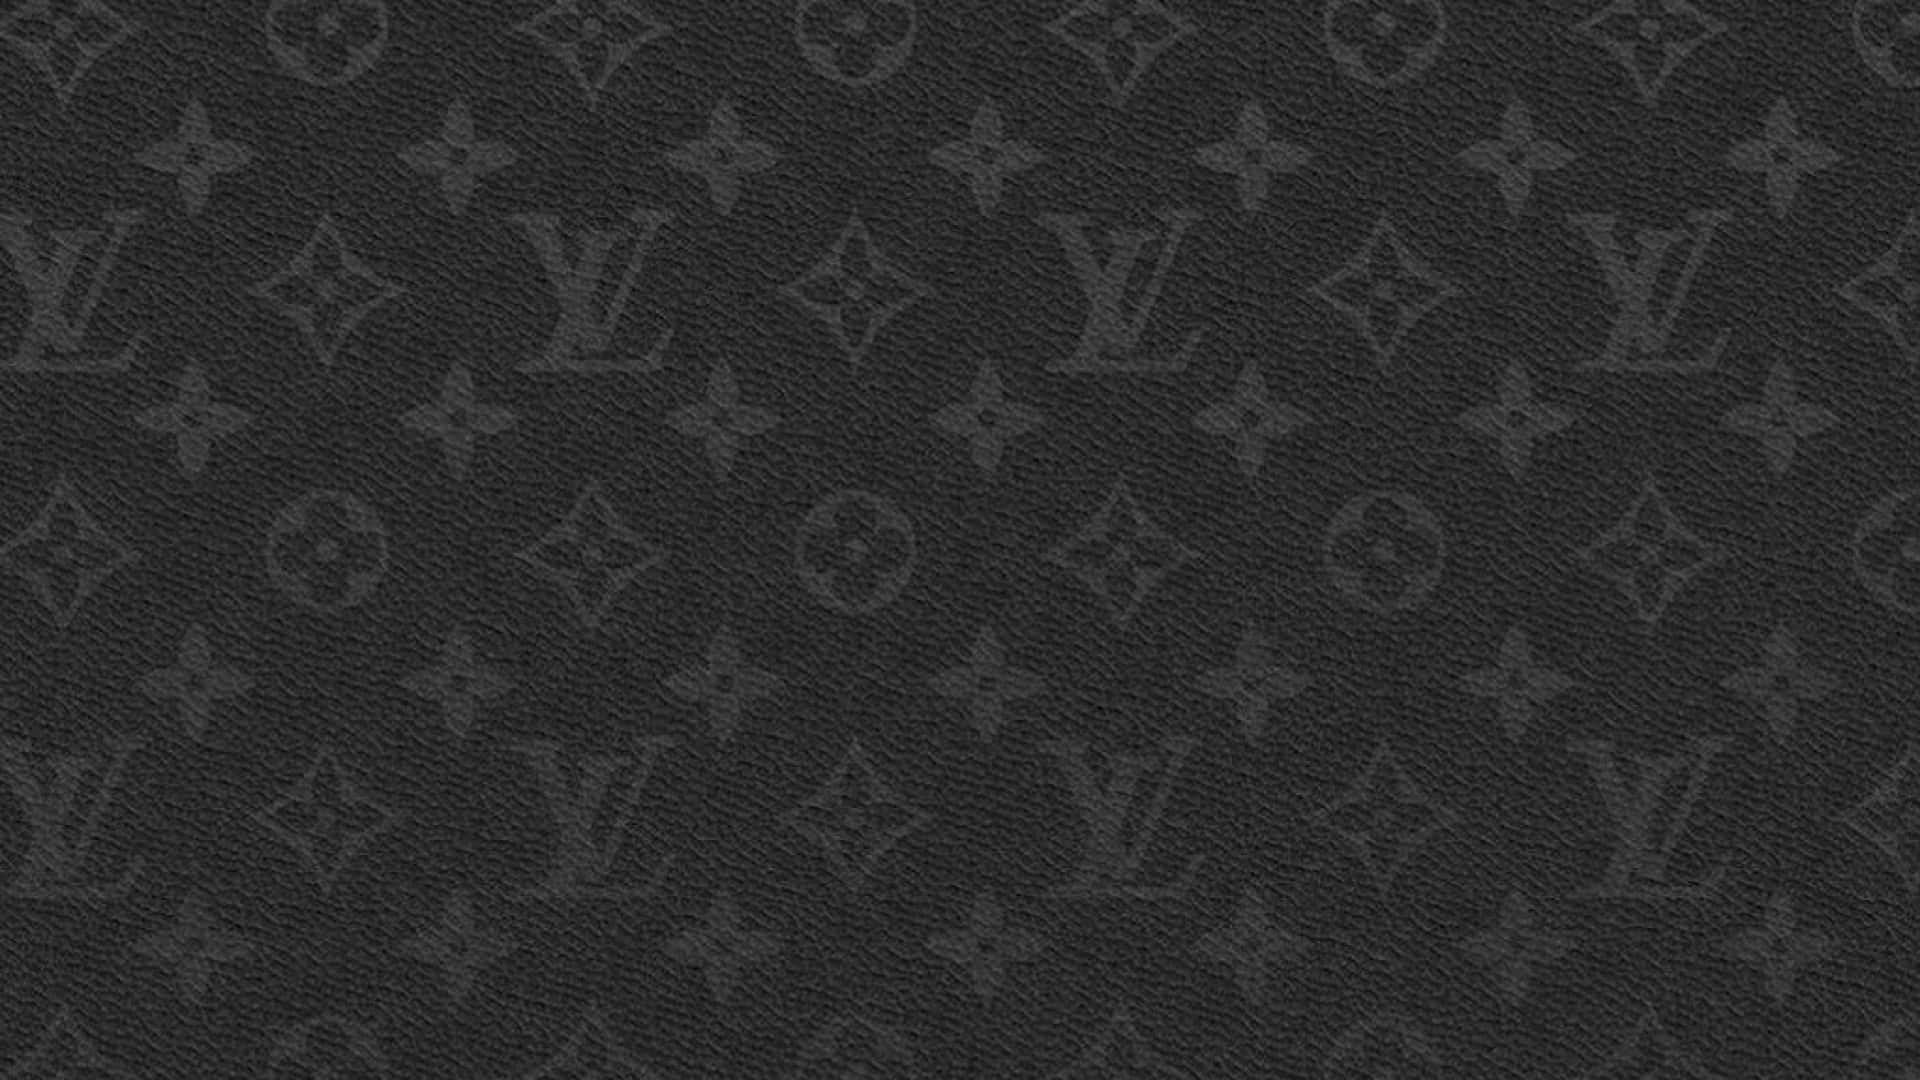 Cool Louis Vuitton 1920 X 1080 Wallpaper